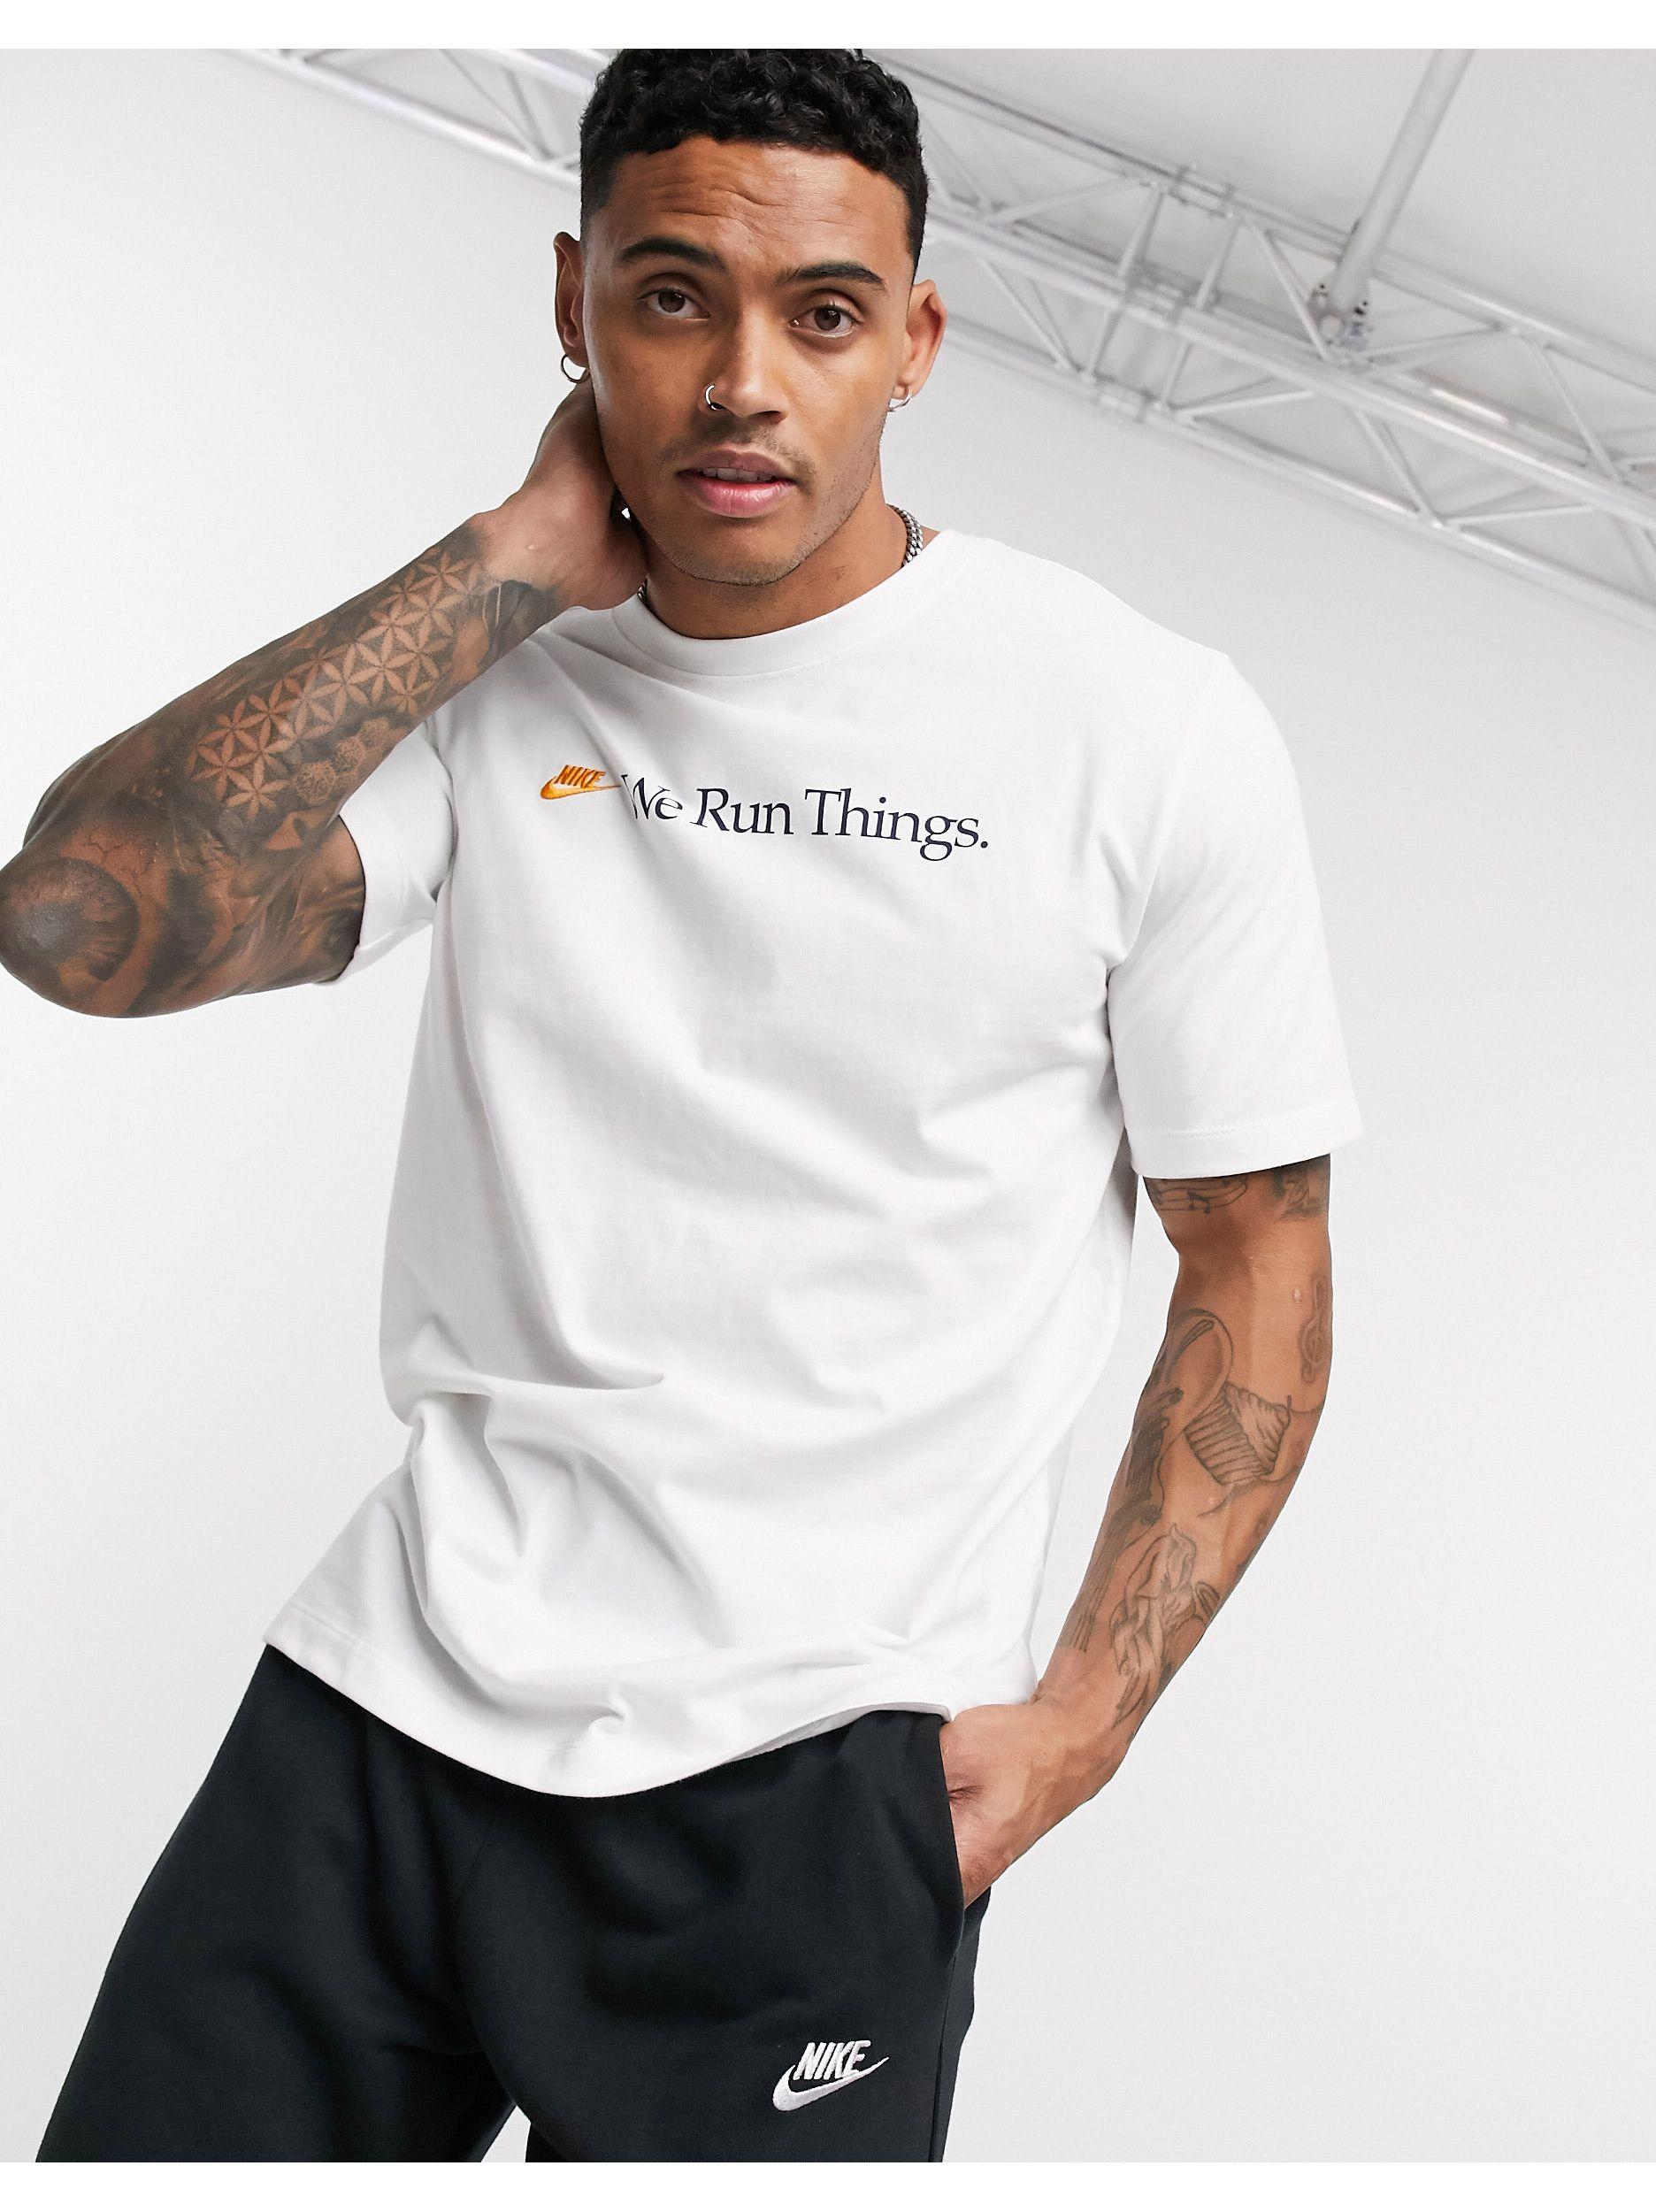 Nike 'we Run Things' T-shirt in Beige (Natural) for Men - Lyst